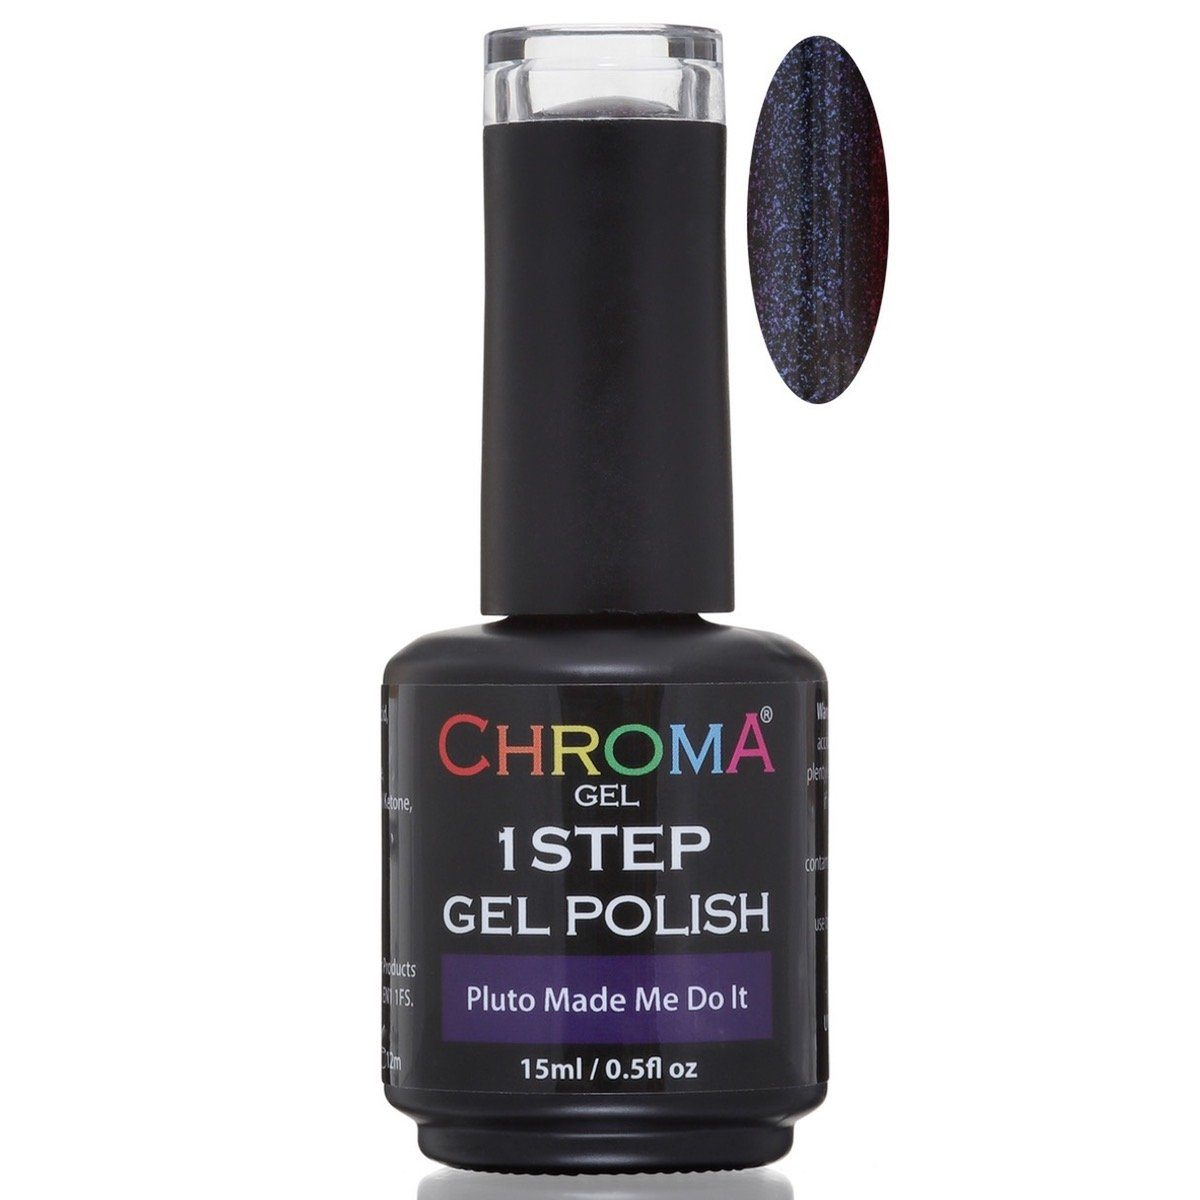 Chroma Gel 1 Step Gel Polish Pluto Made Me Do It No.74 - Beauty Hair Products LtdChroma Gel